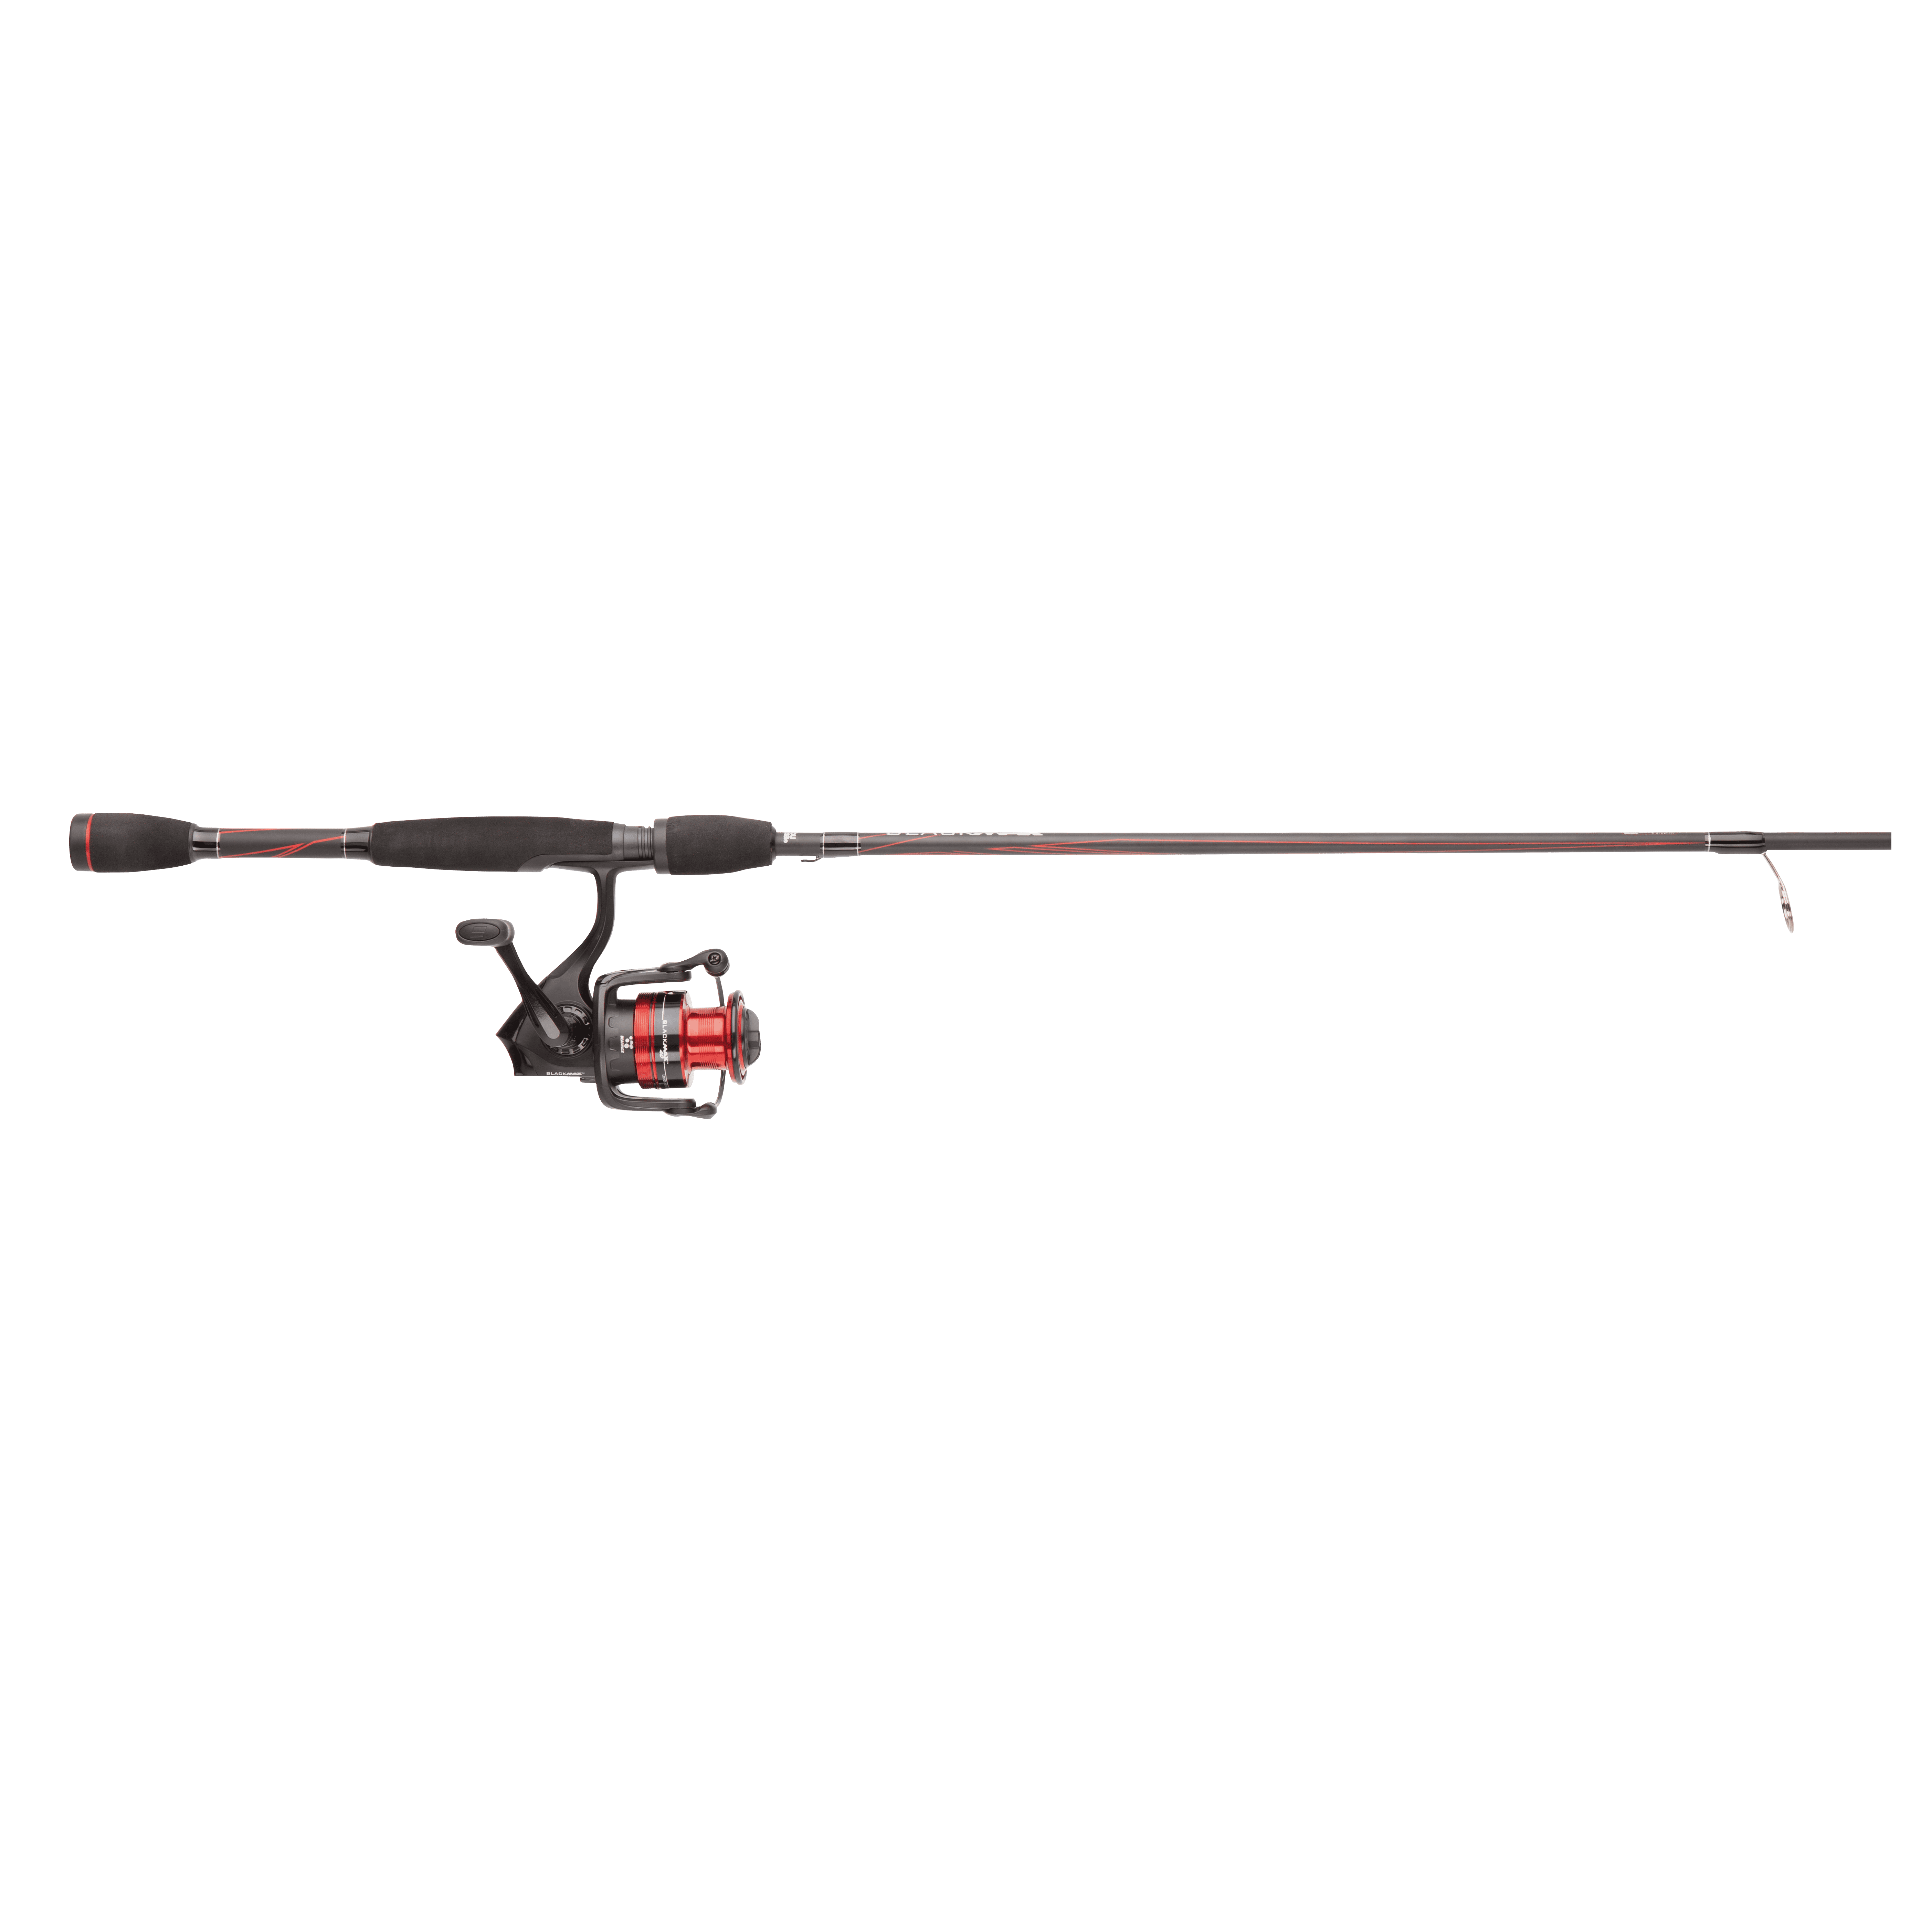 Abu Garcia 6’6” Black Max Fishing Rod and Reel Spinning Combo